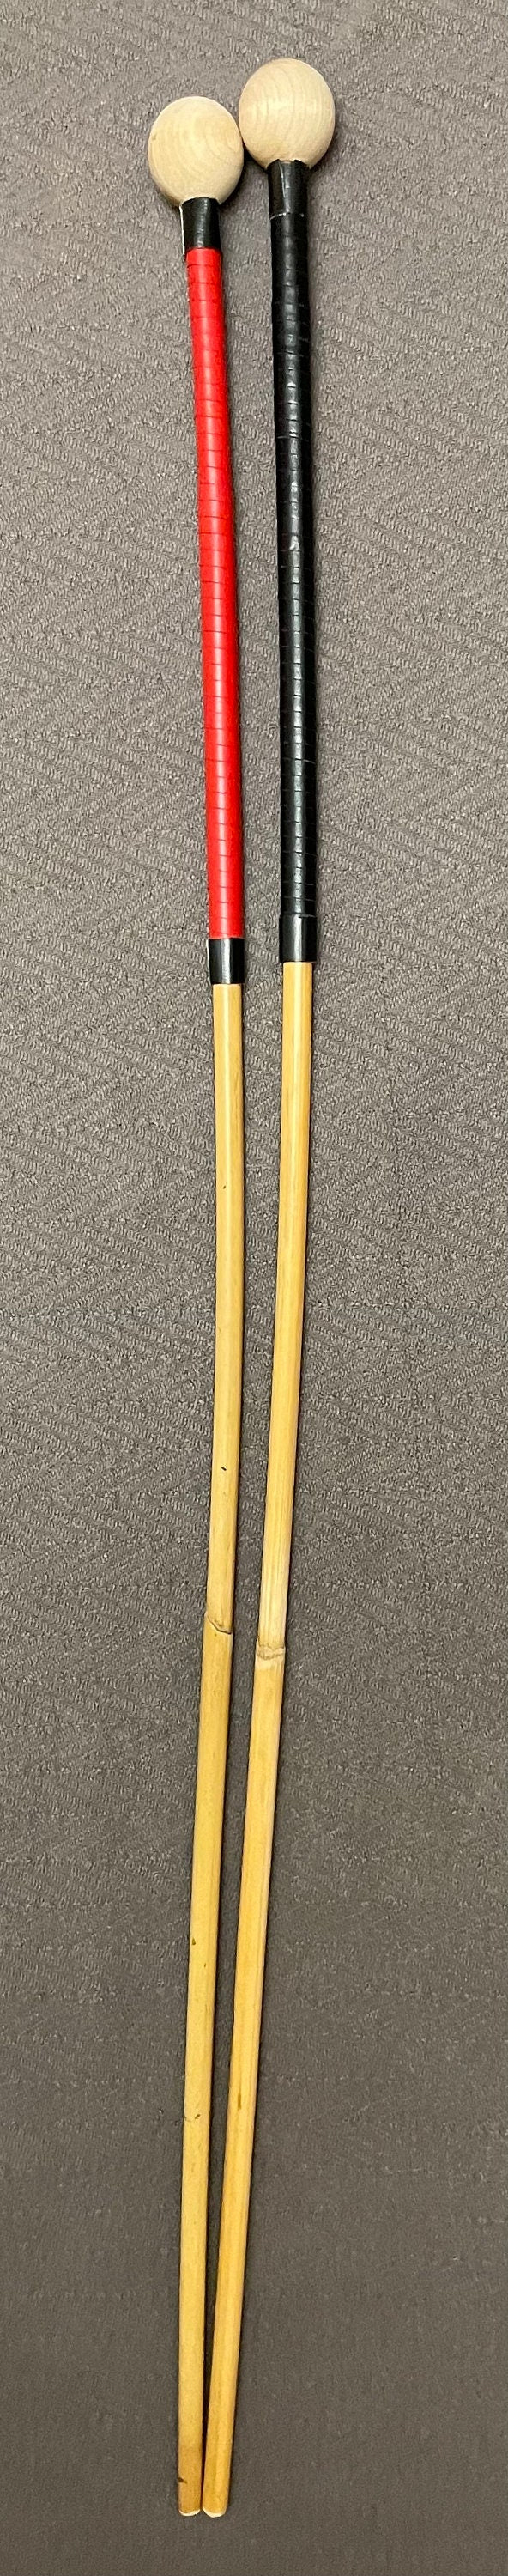 The Maharani Classic Dragon Rattan Punishment Cane with Kangaroo Leather Handles - 100 to 105 cms Length - 11.5 - 12.5 mm Diameter